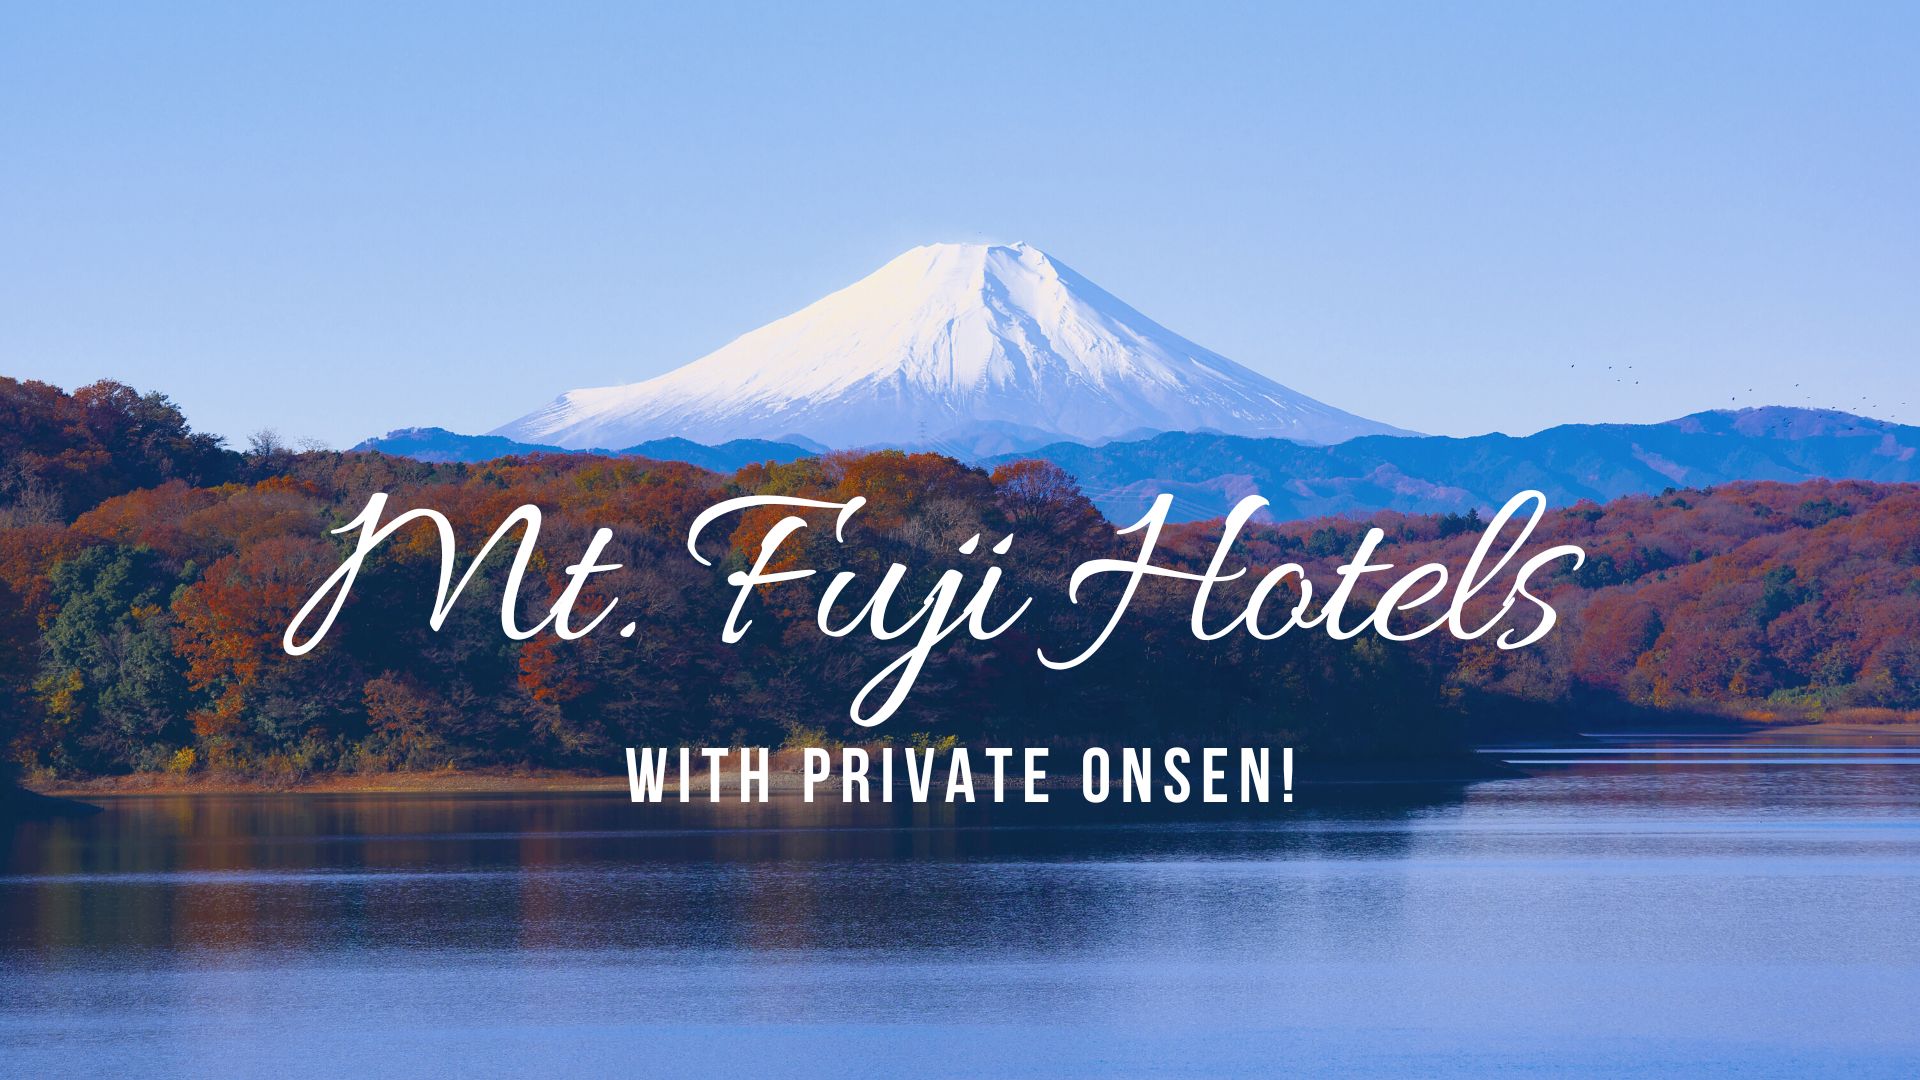 Mt. Fuji hotels with private onsen, Mt. Fuji ryokan with private onsen, best ryokan near Mt. Fuji, best onsen with views of Mt. Fuji, fujisan private onsen